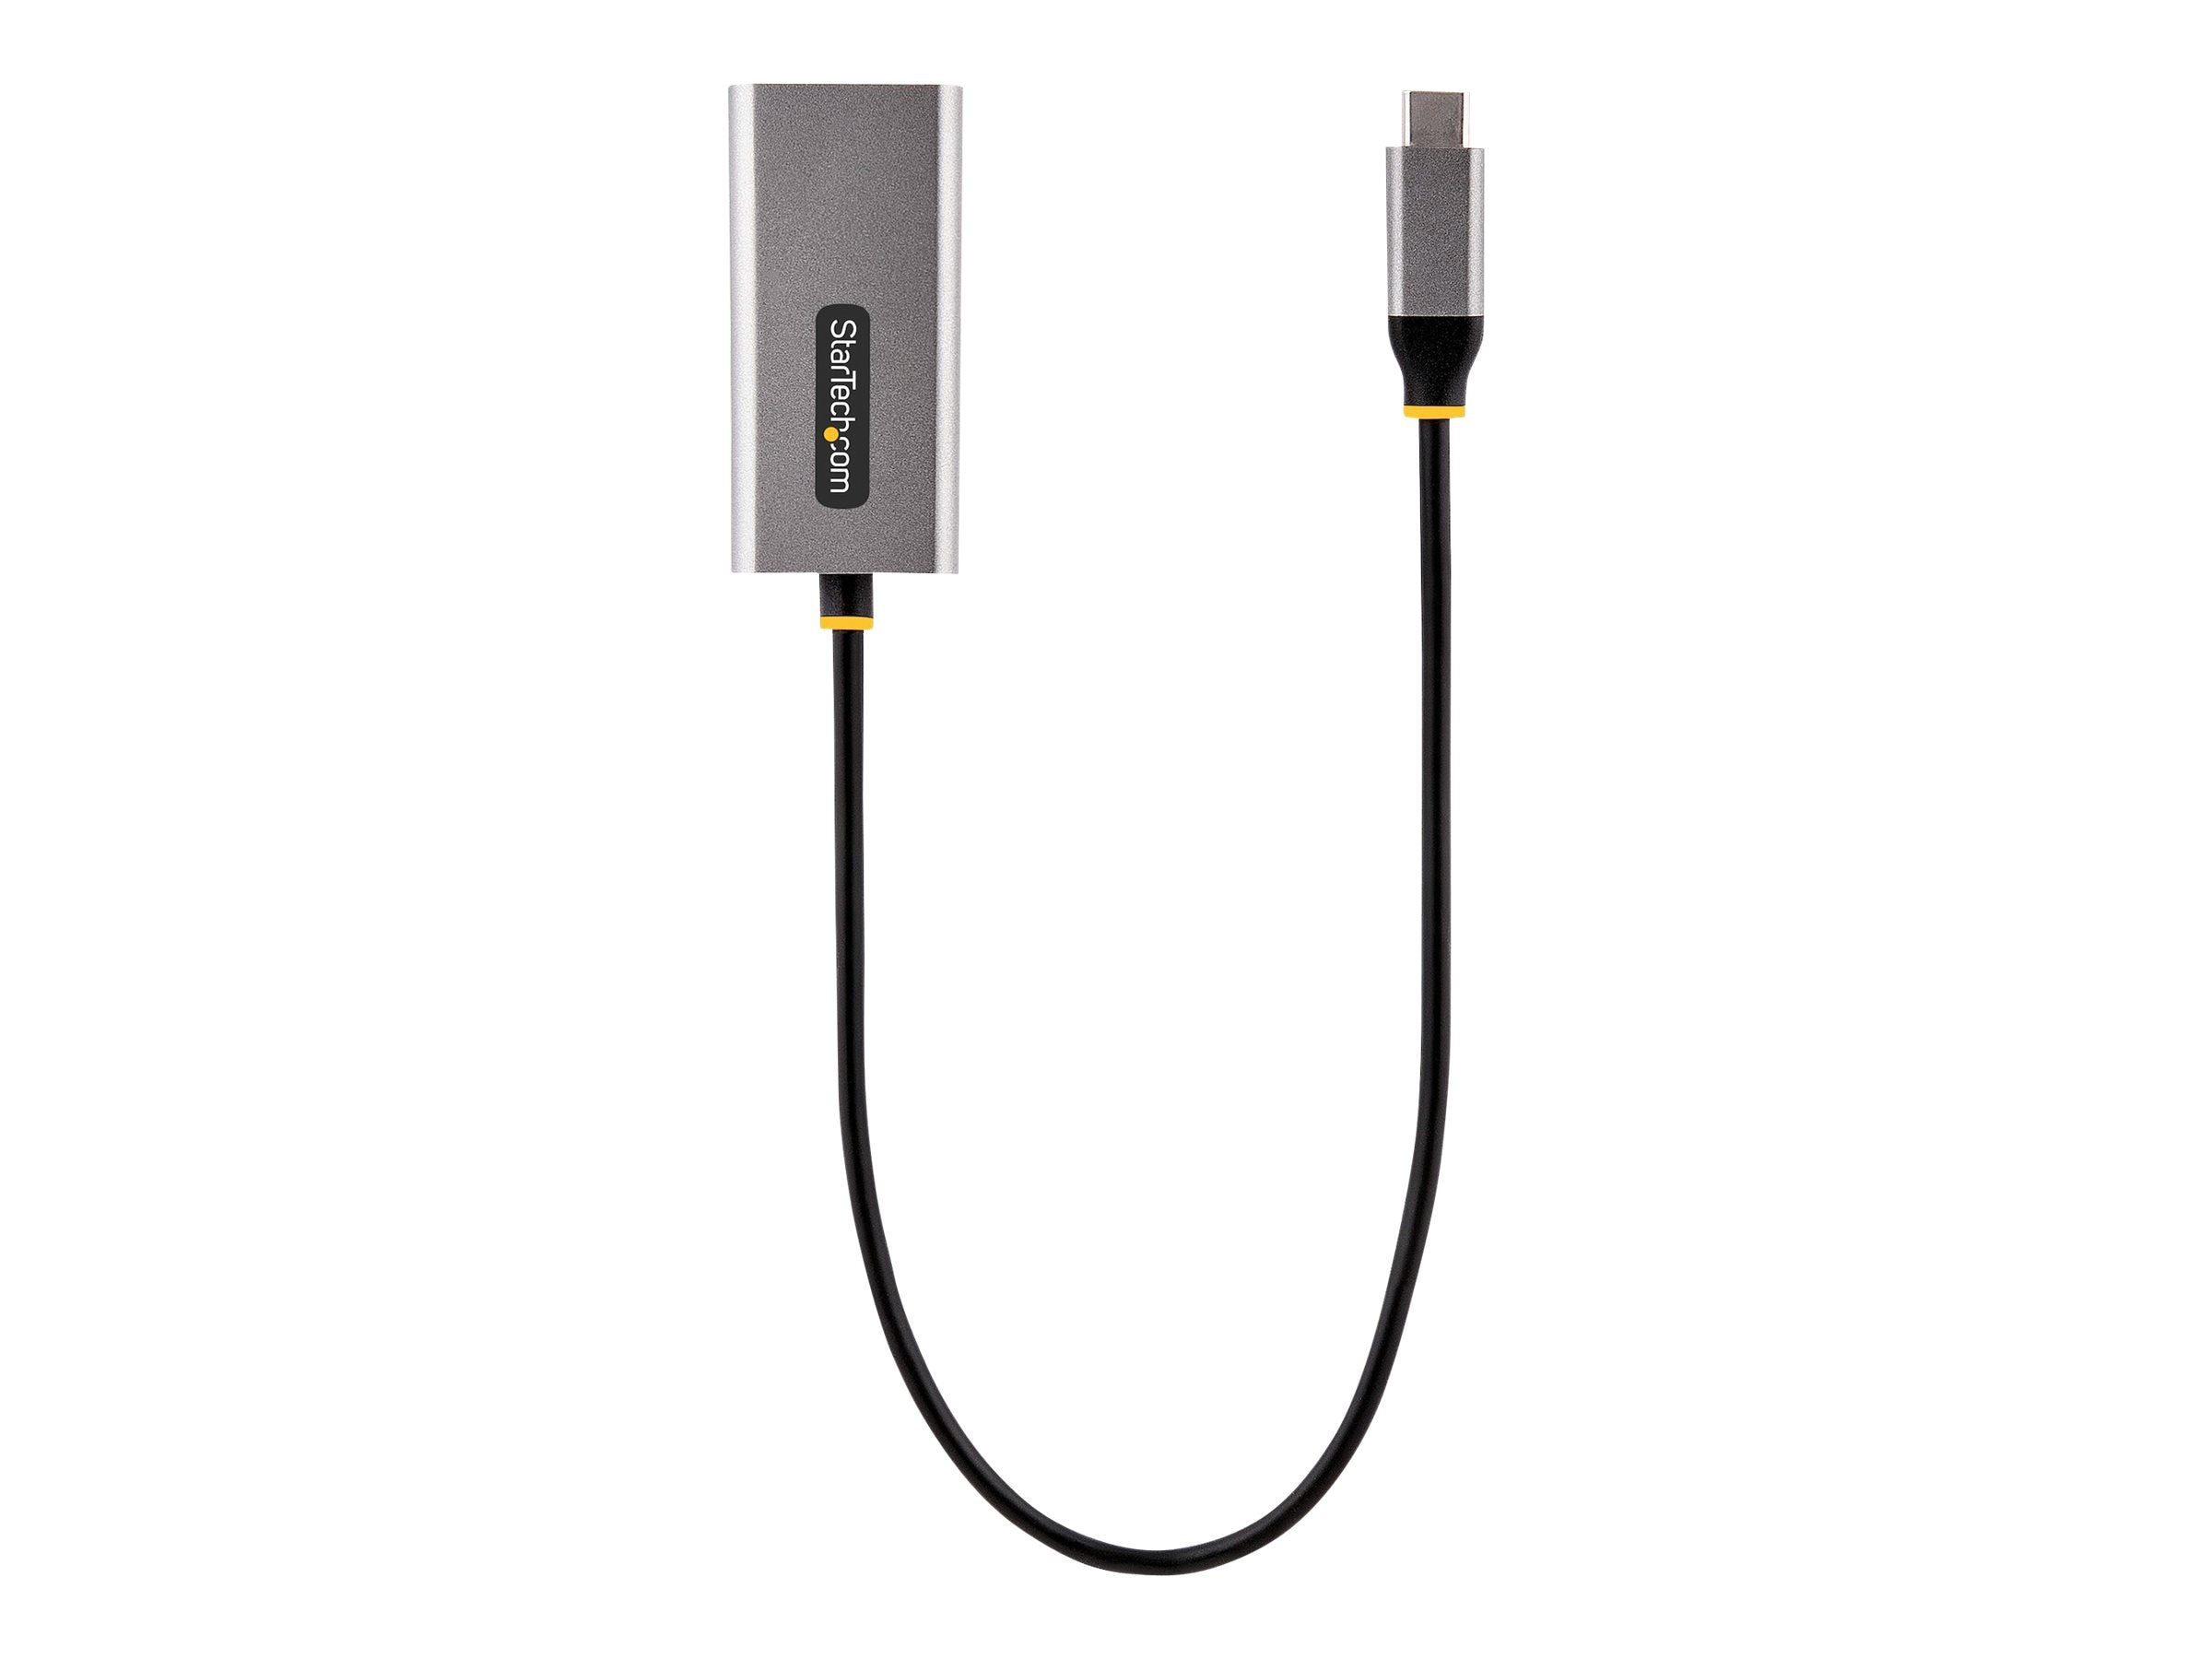 StarTech.com 6 USB C to USB Adapter USB 3.0 Type C Dongle - USB